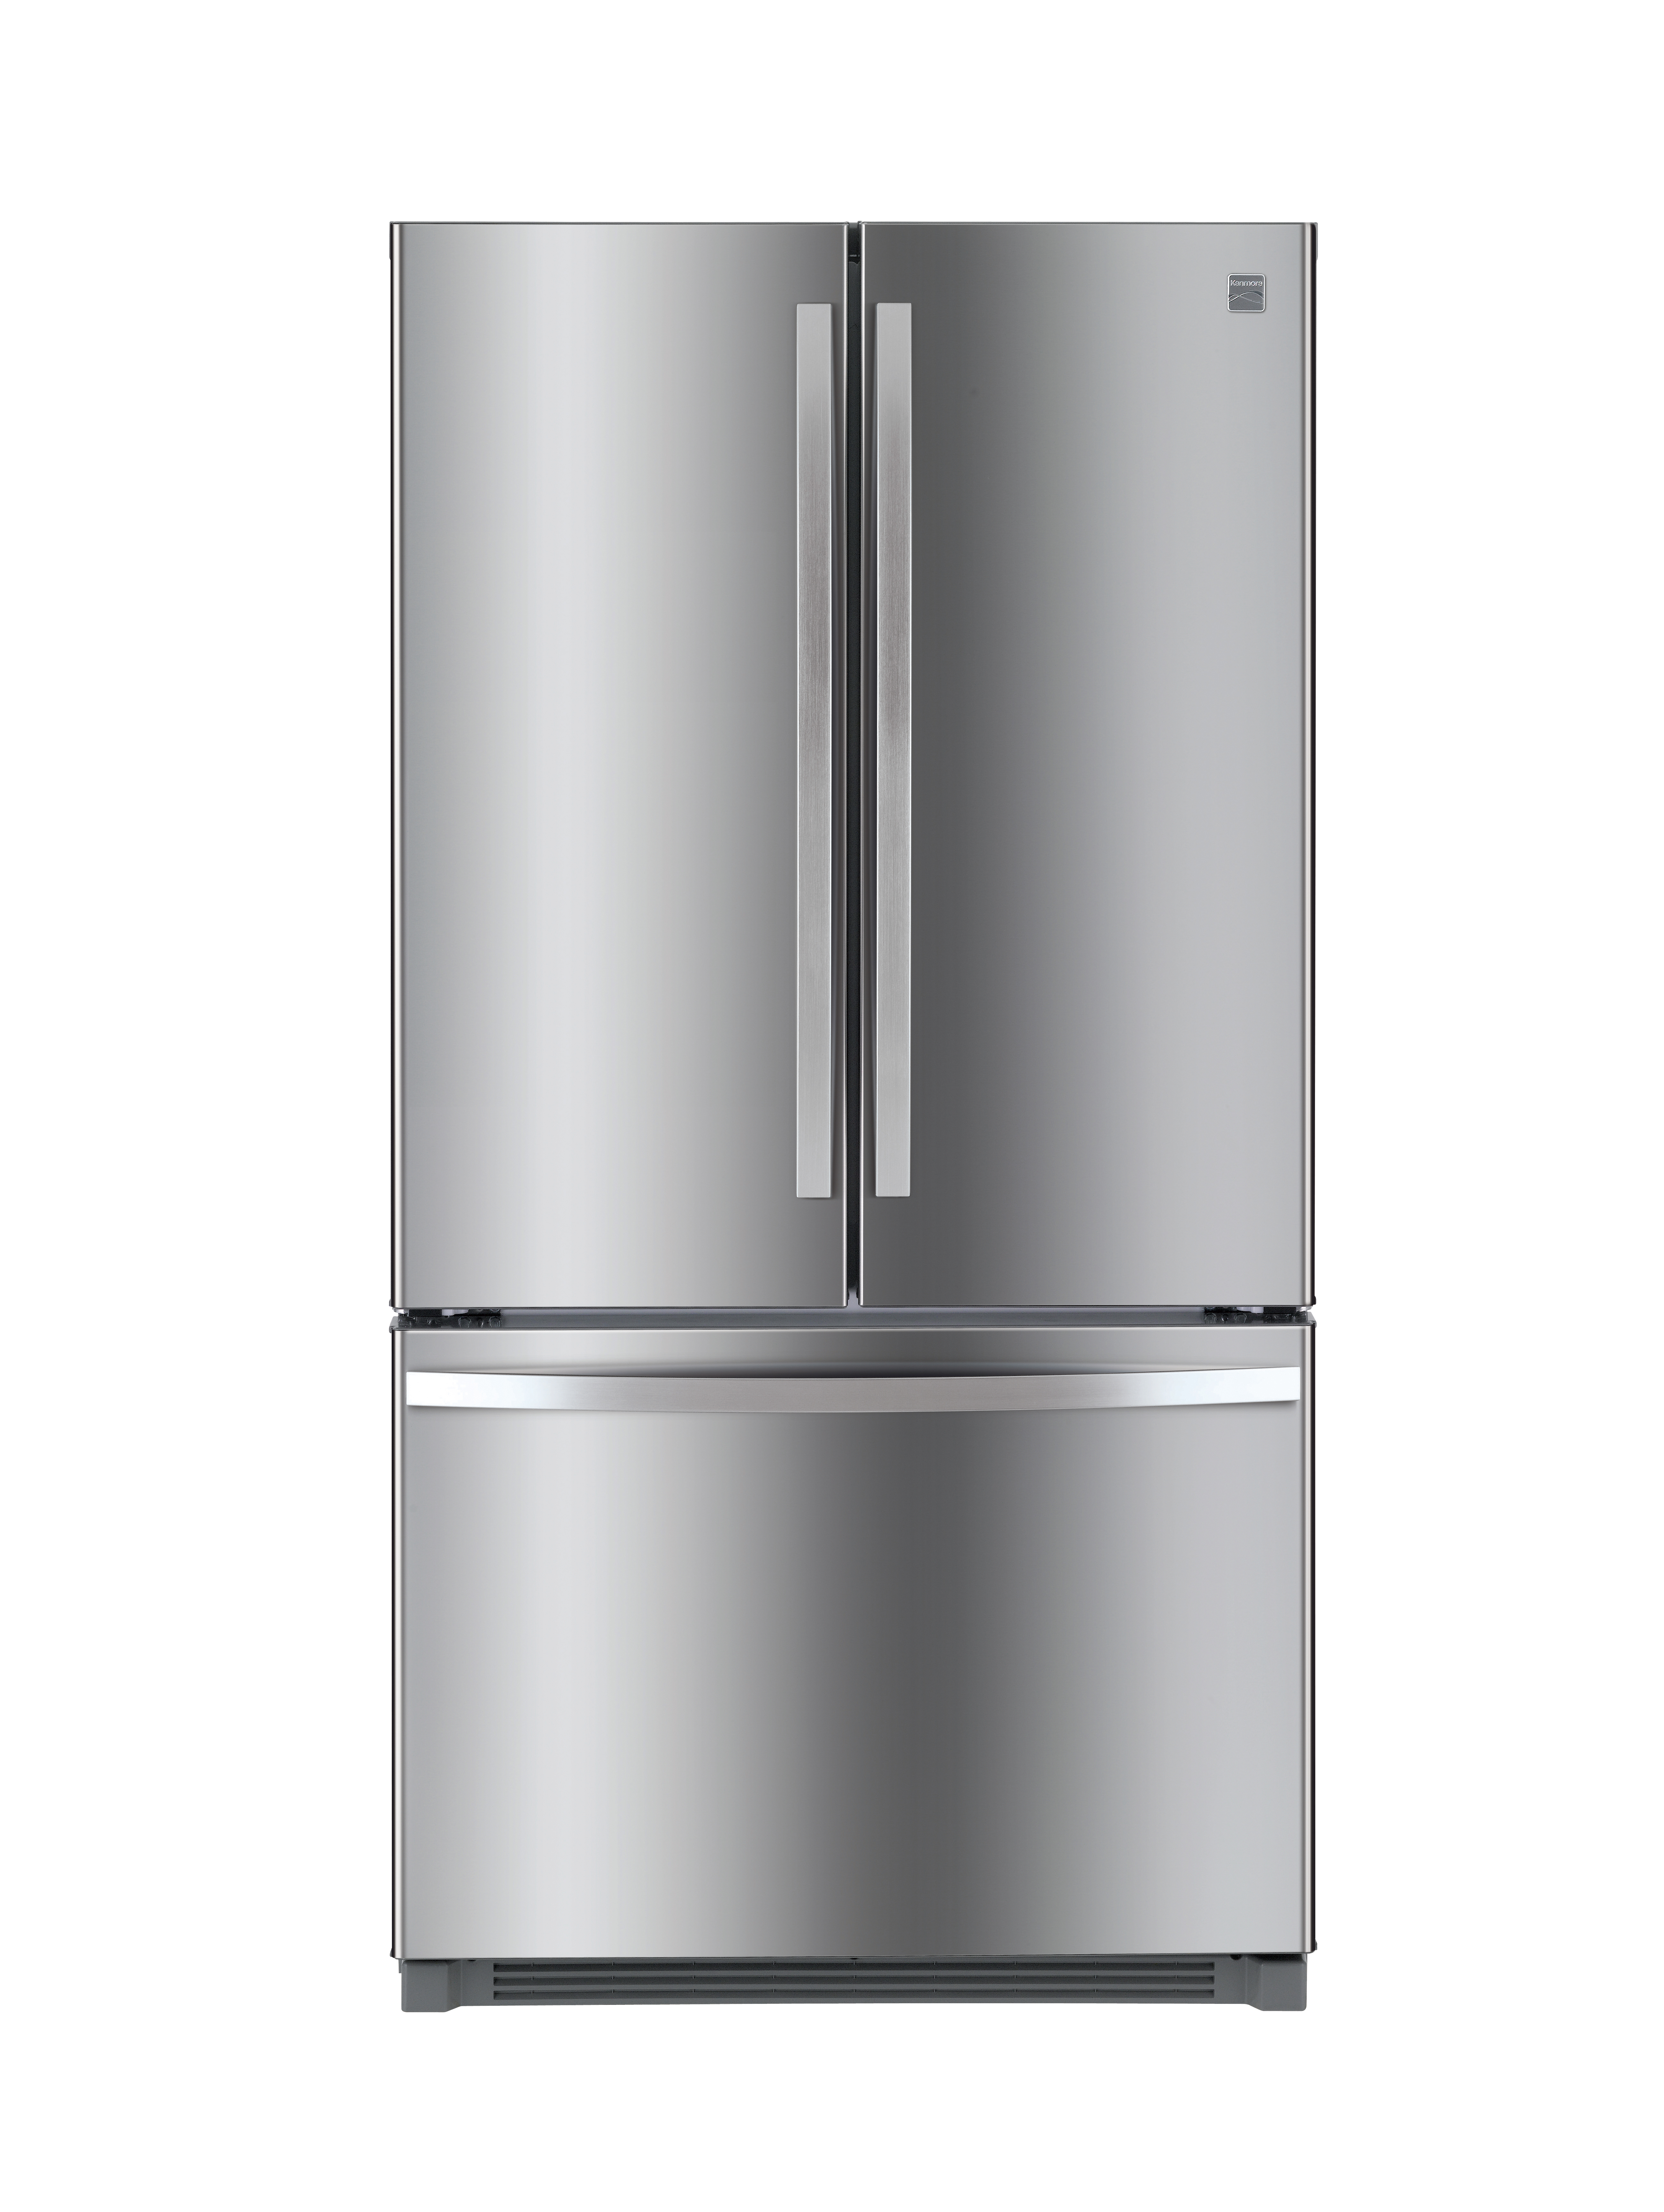 Kenmore 26.1 cu. ft. French Door Refrigerator – Fingerprint Resistant Stainless Steel Only $899.99! (Reg $1899.99)